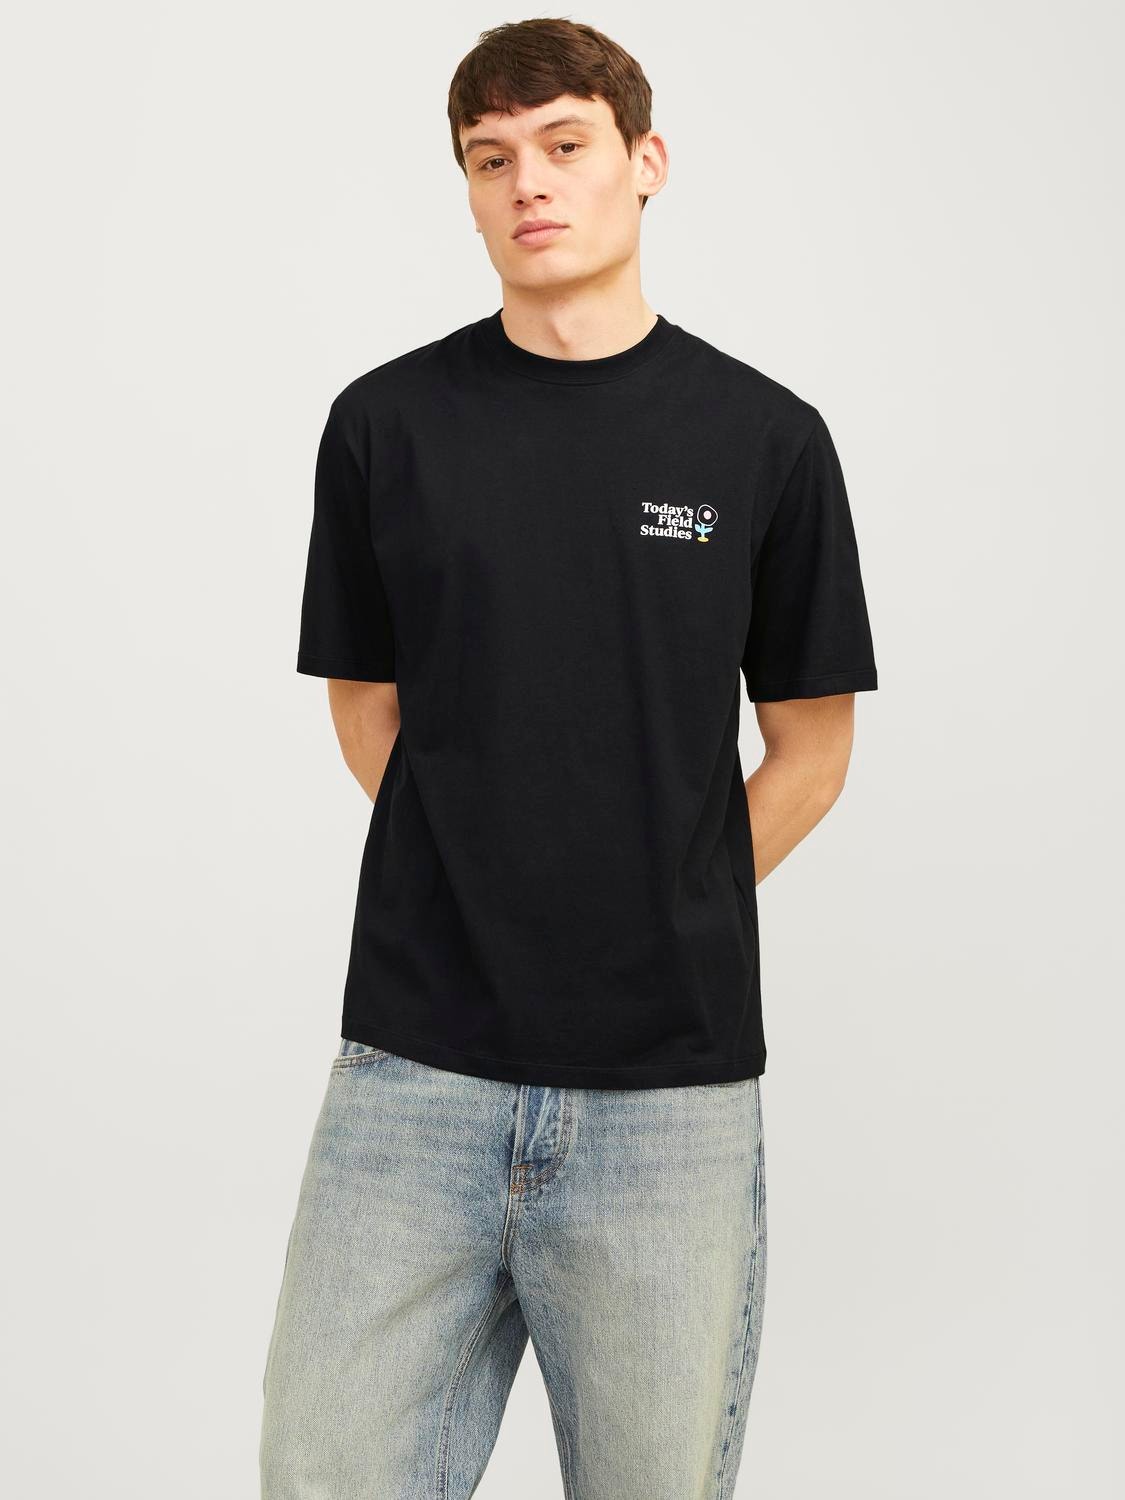 Jack & Jones T-shirt Stampato Girocollo -Black - 12263606